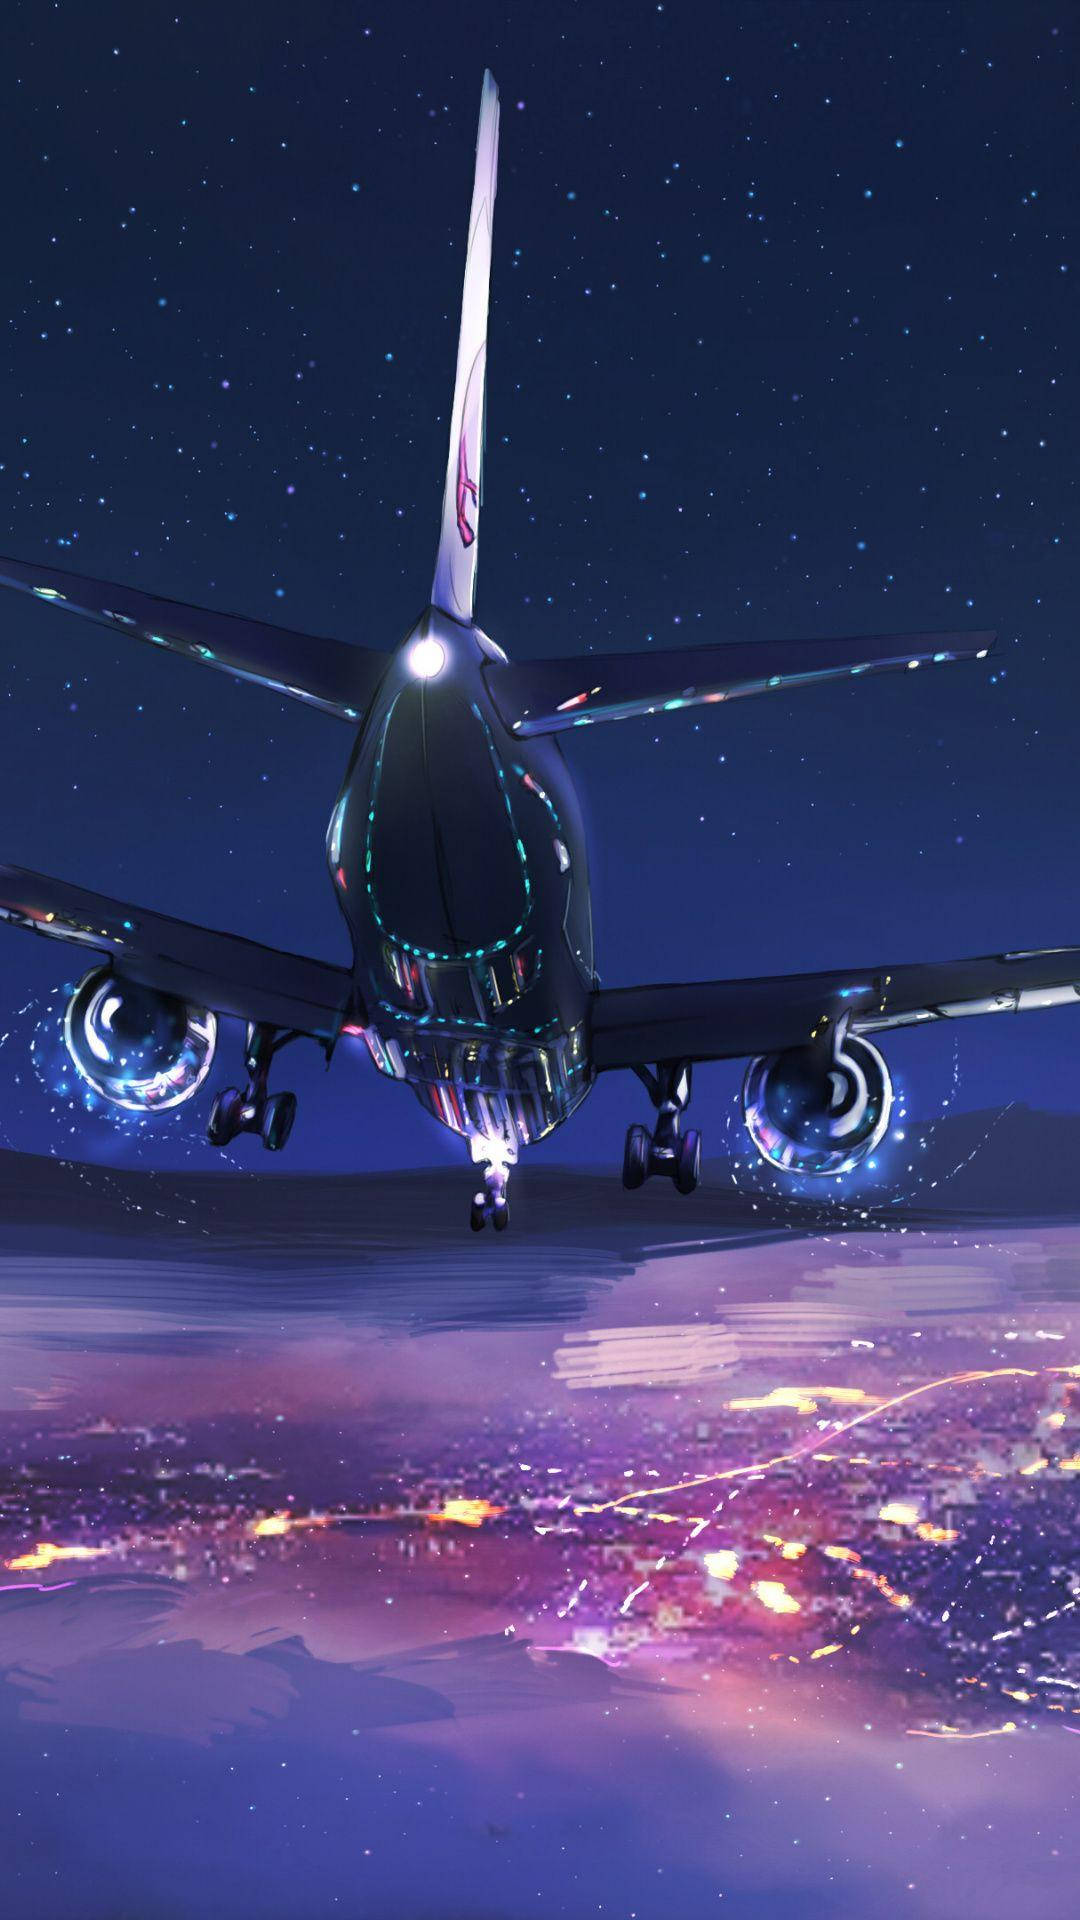 Anime Purple Airplane Iphone